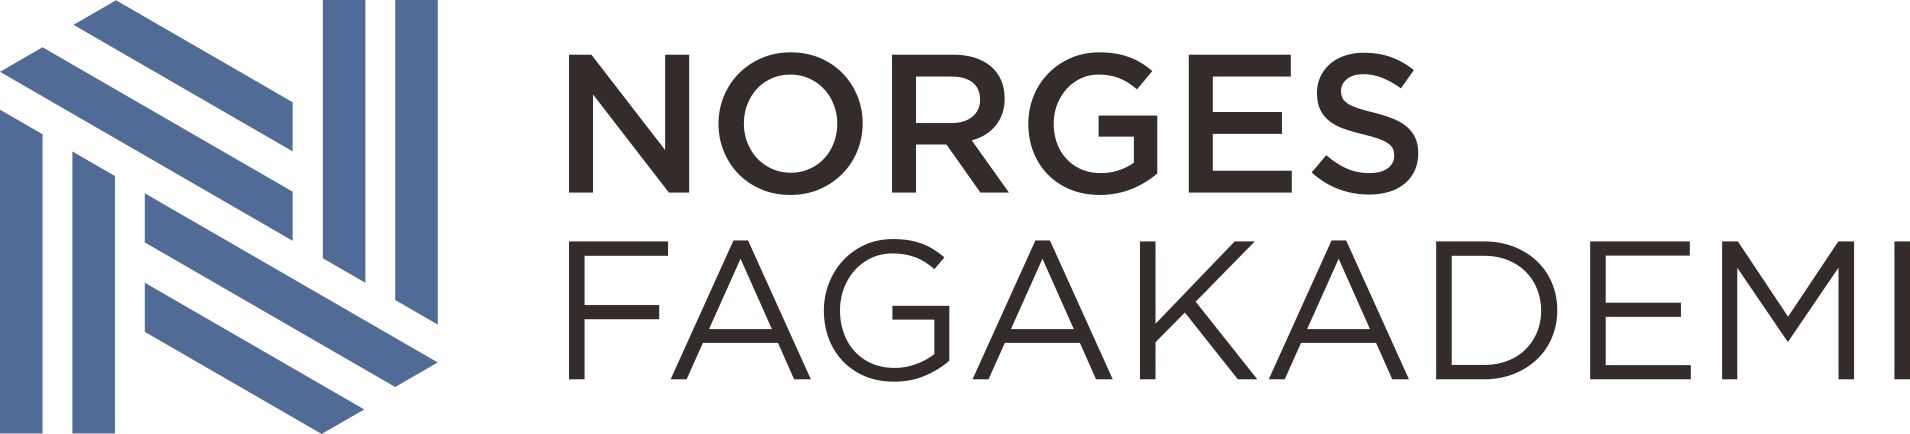 Norges Fagakademi logo